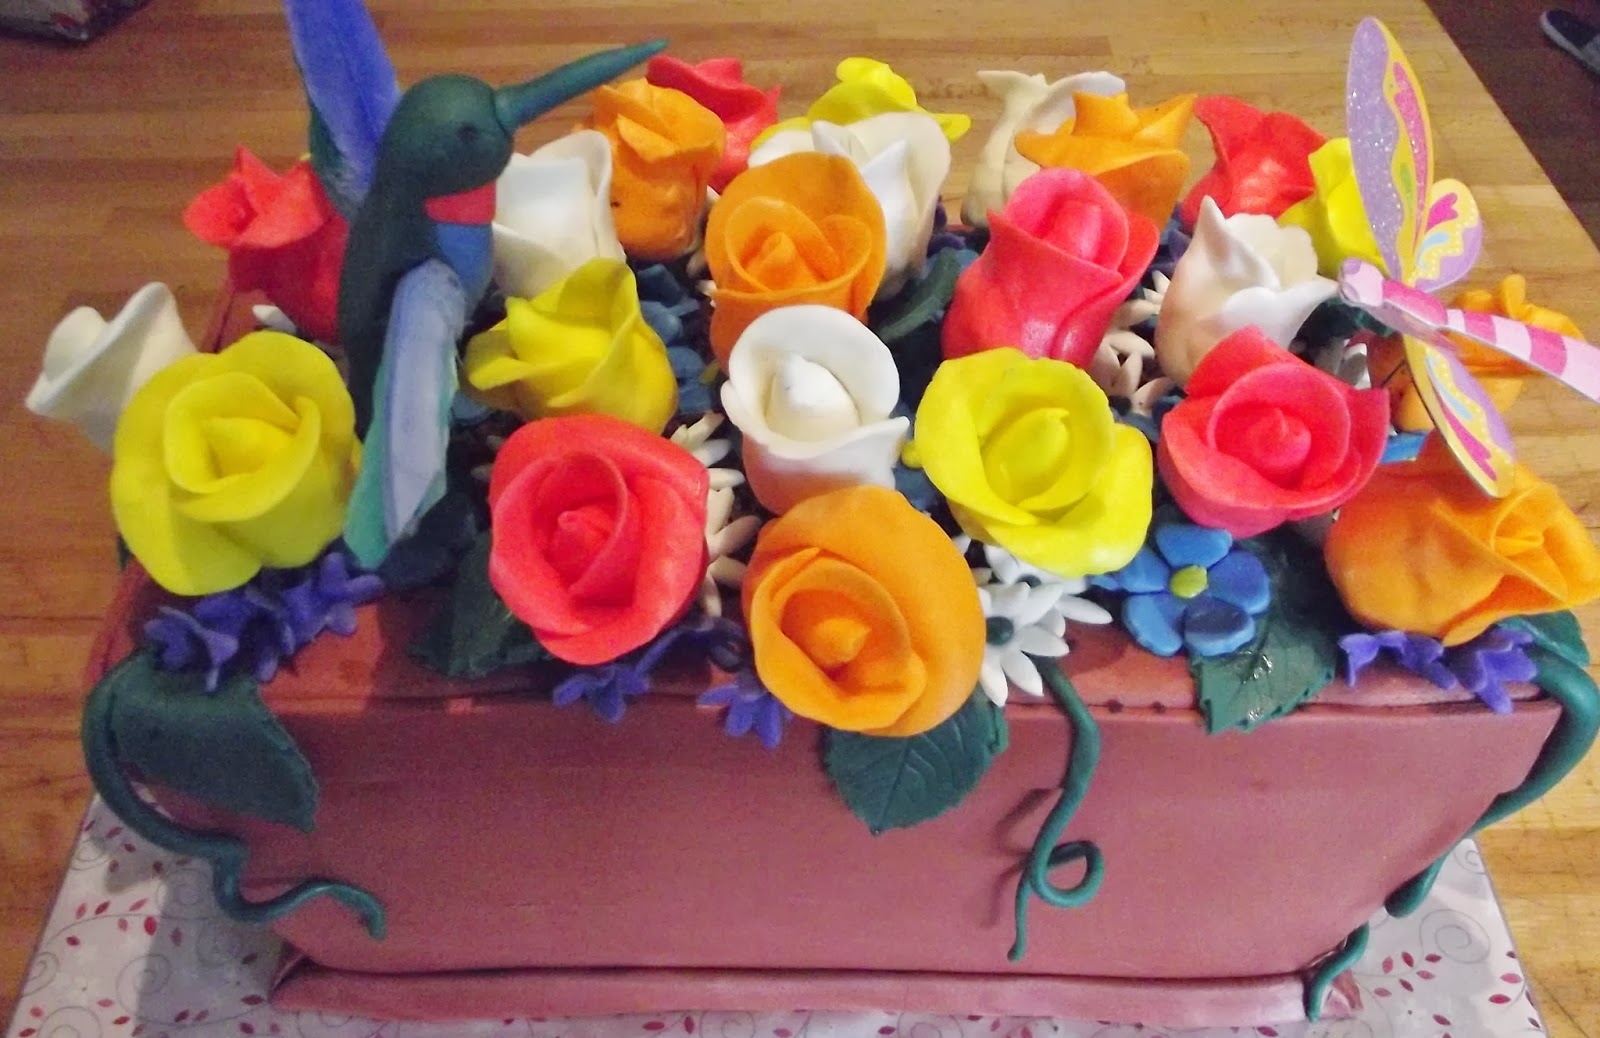 Edible Arrangements Birthday Cake